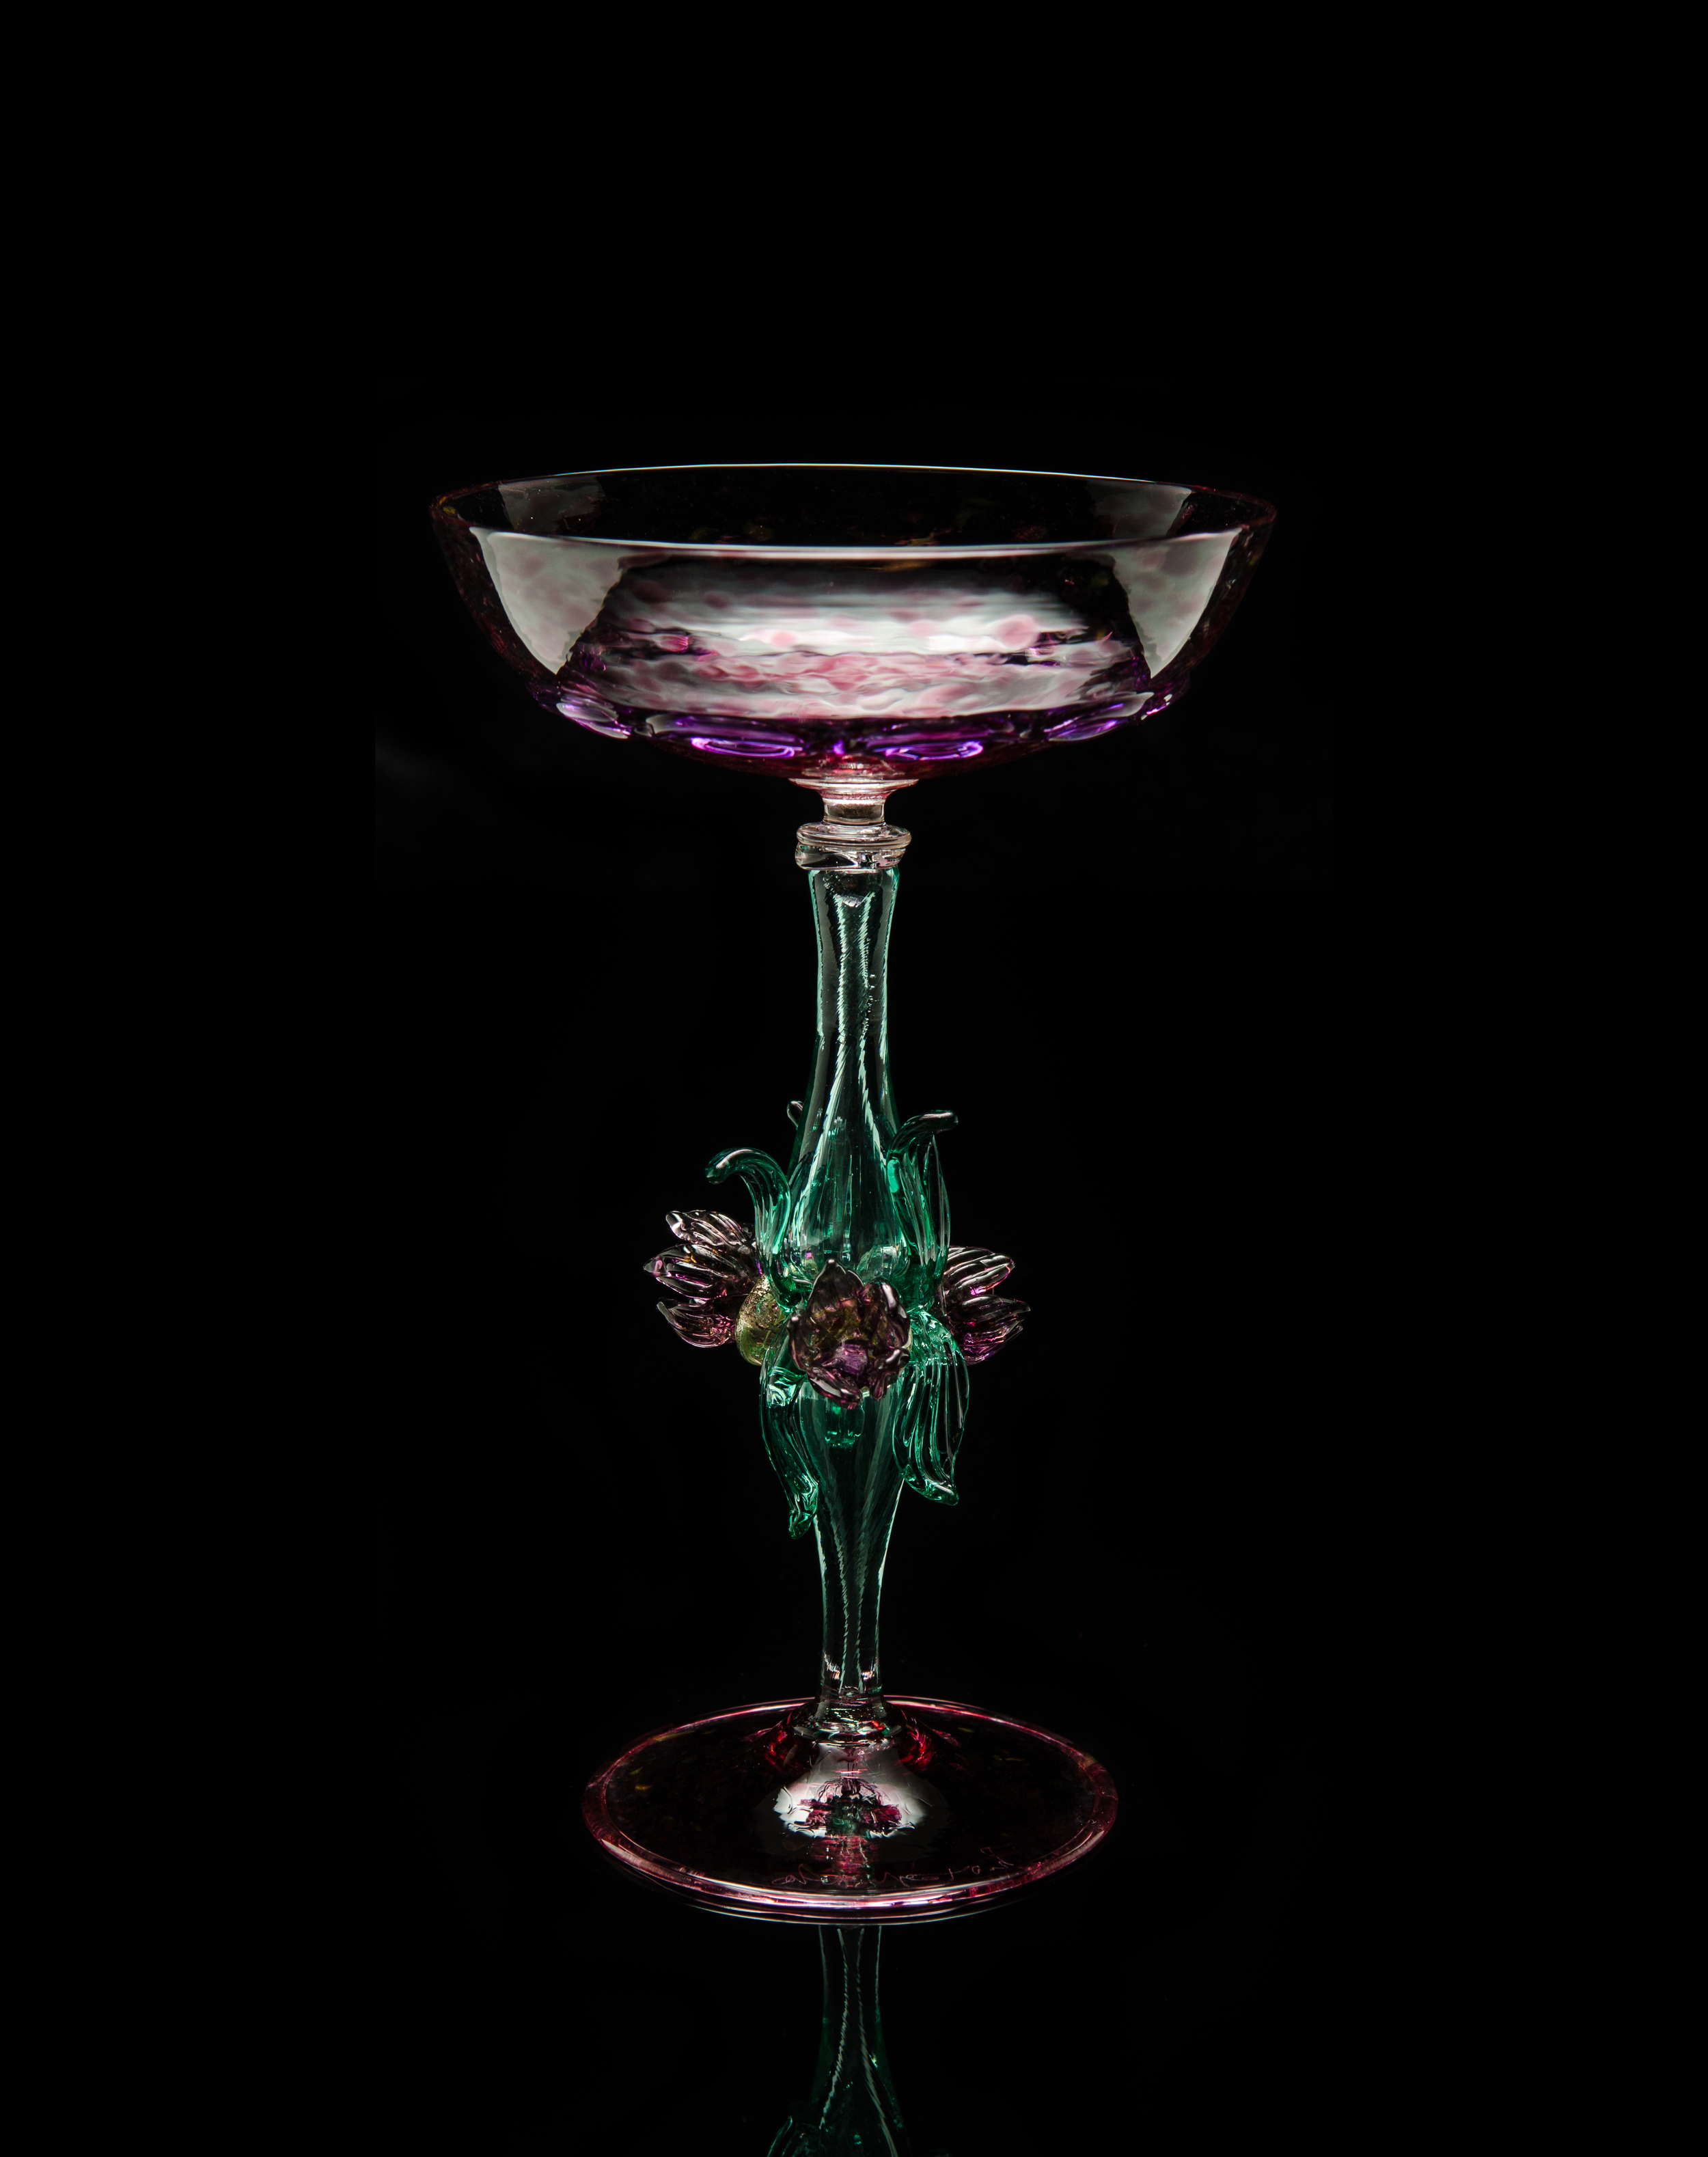  Lino Tagliapietra,&nbsp; Goblet&nbsp; (1991-1994, glass, 8 3/8 x 5 1/4 x 5 1/4 inches), LT.28 